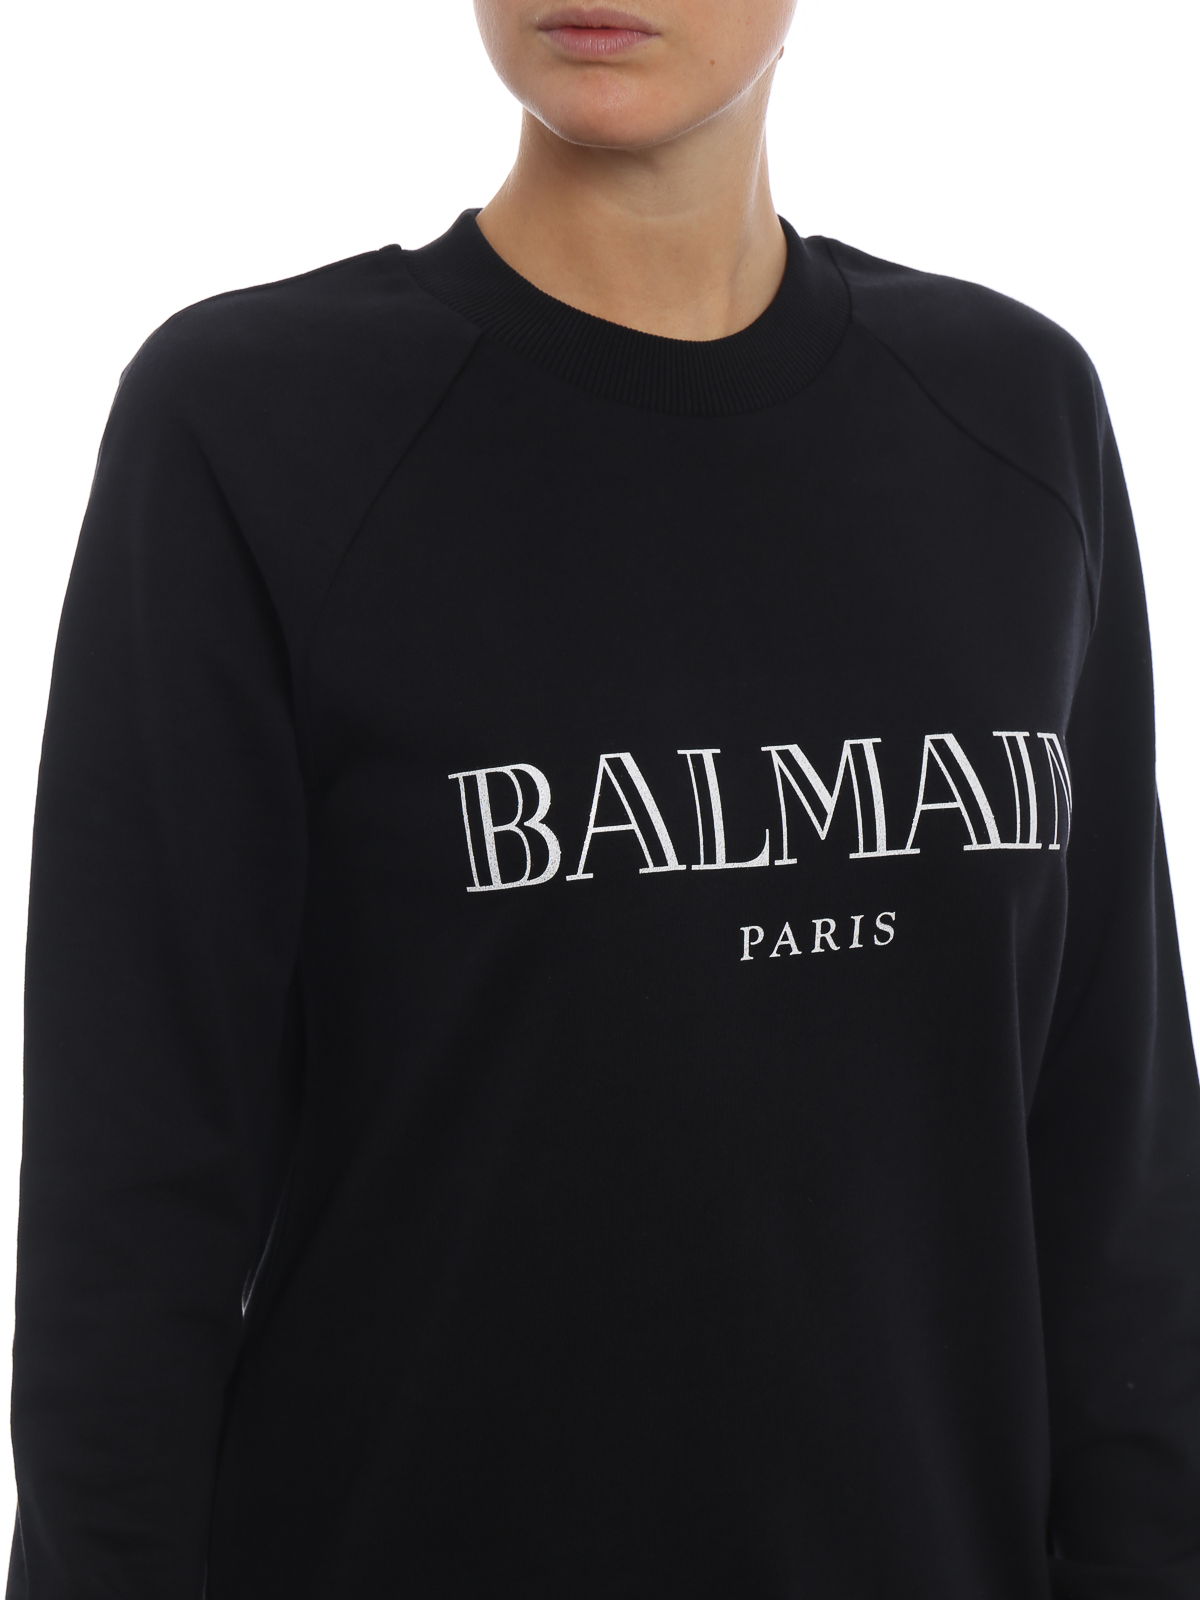 & Sweaters Balmain - Balmain print black sweatshirt - 146908I767C5101